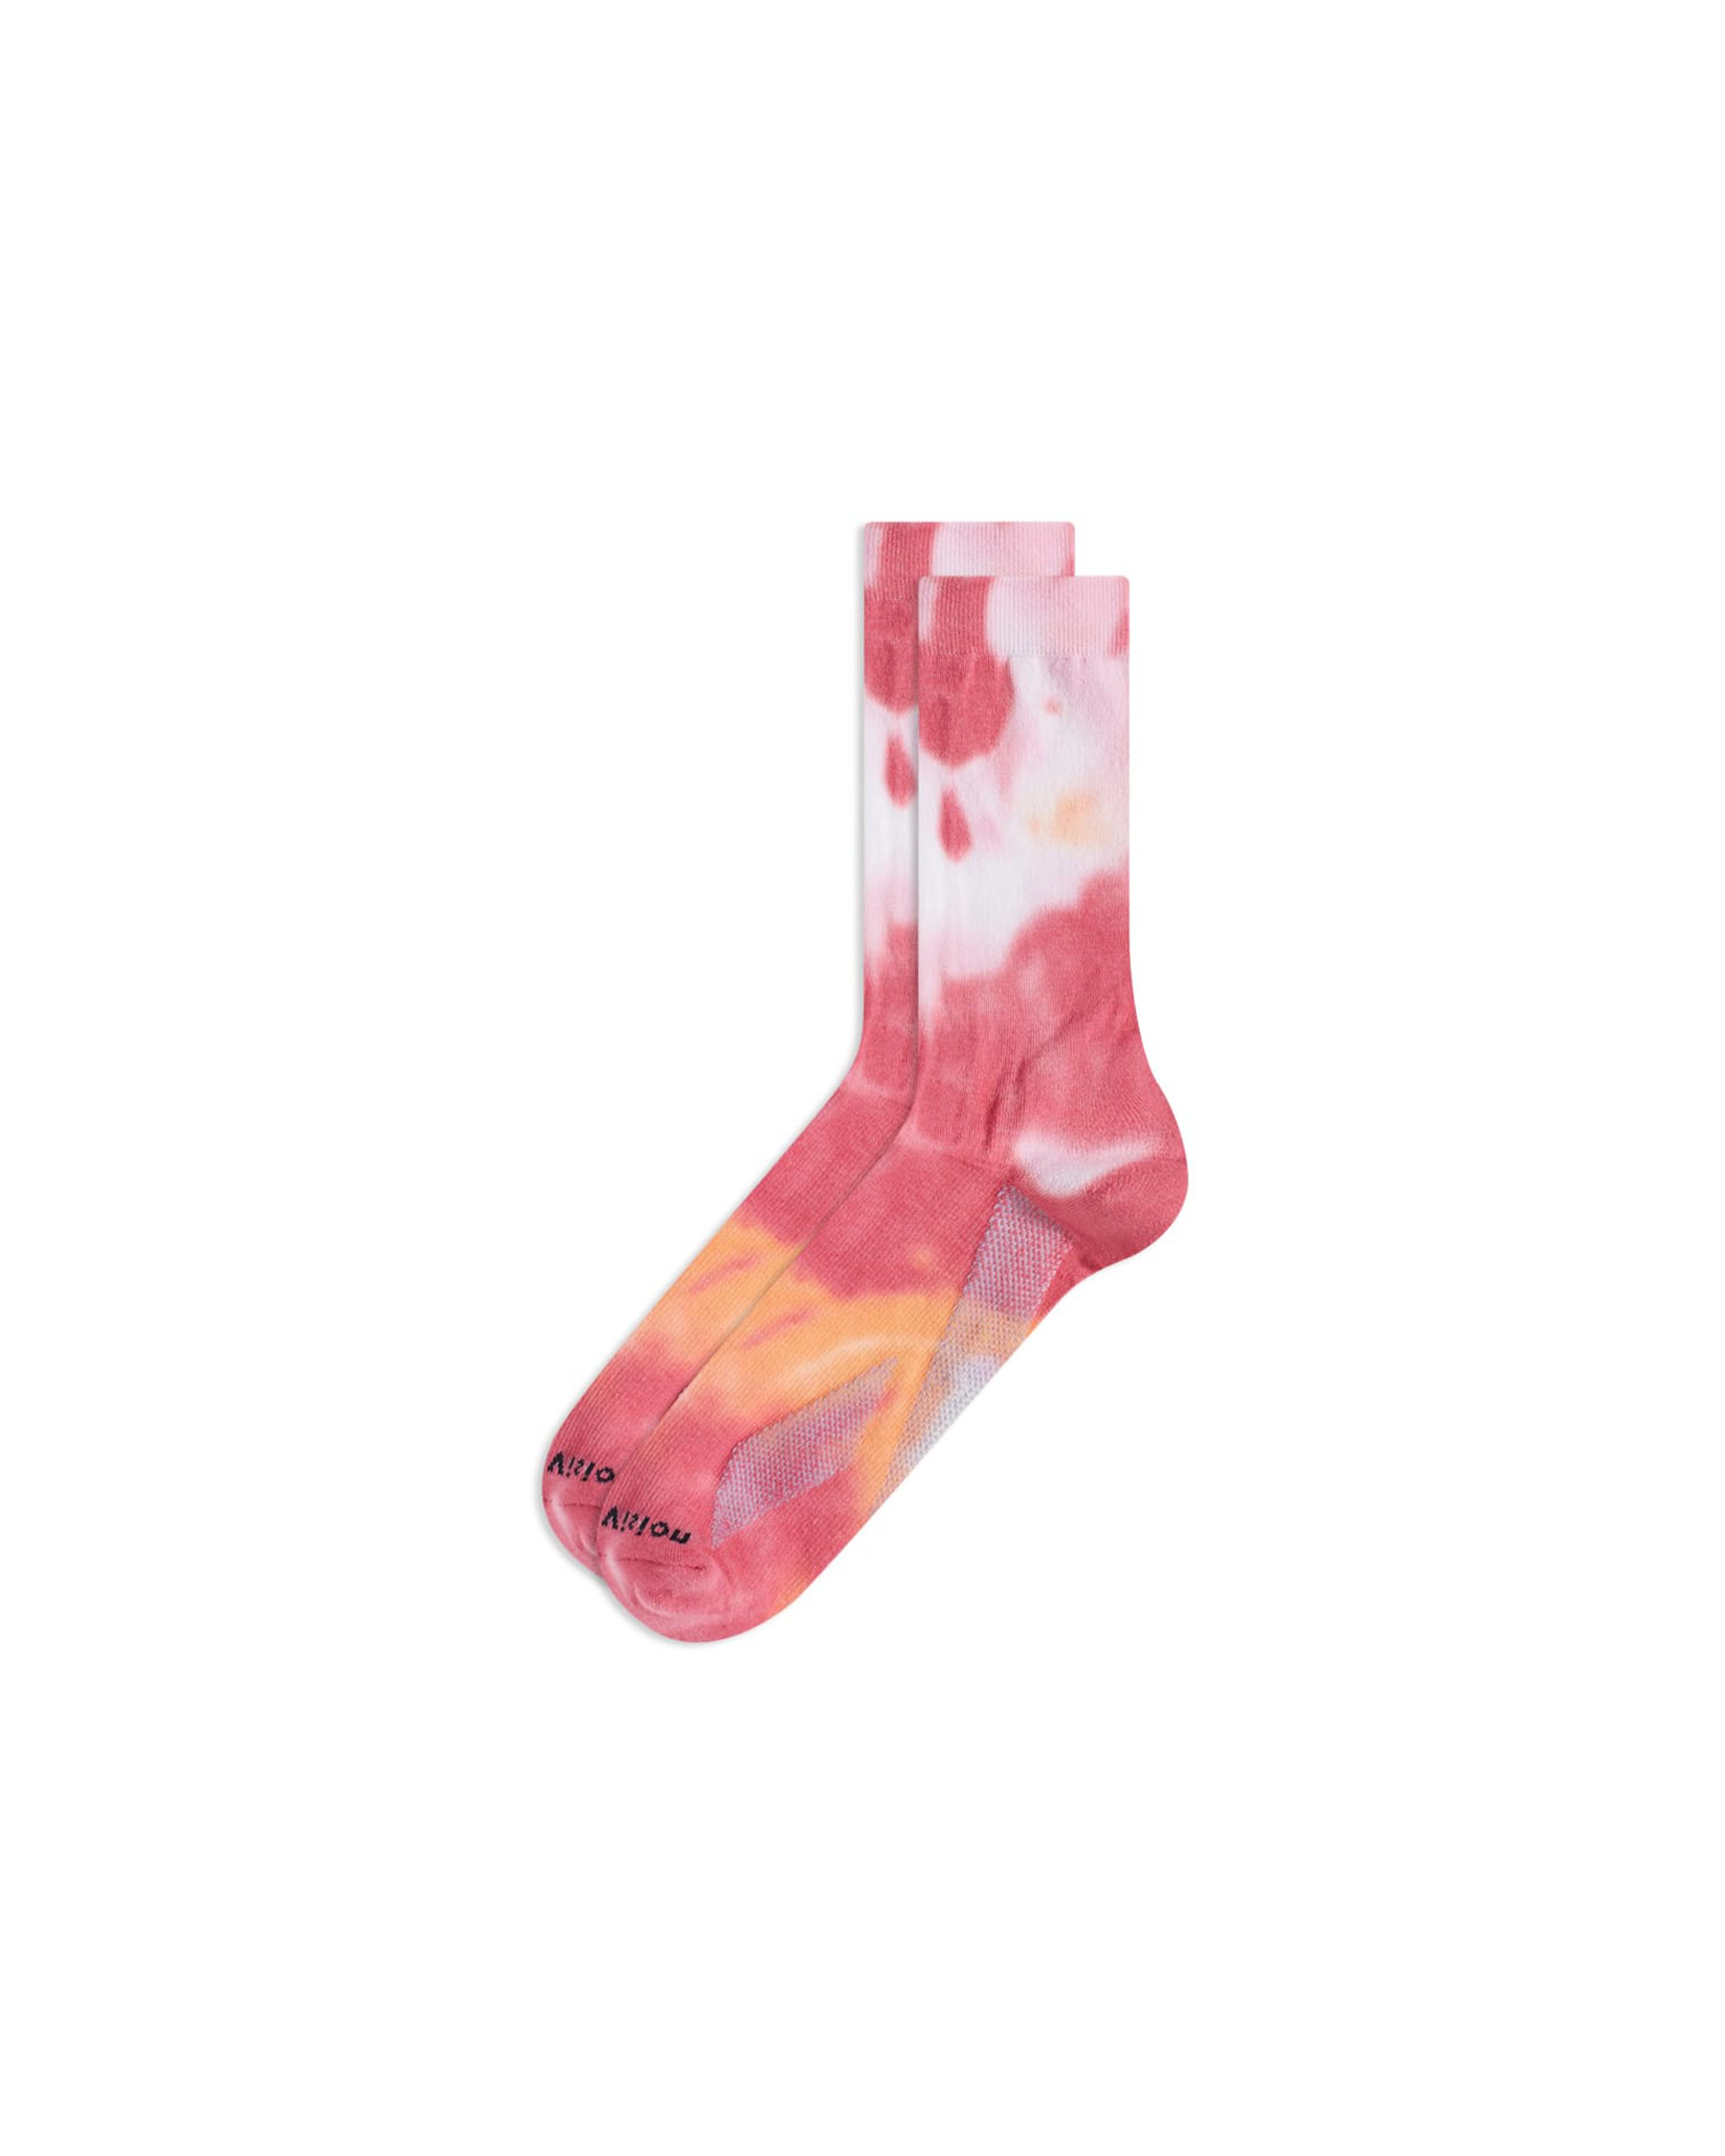 Yoshi Performance Socks - Tie Dye